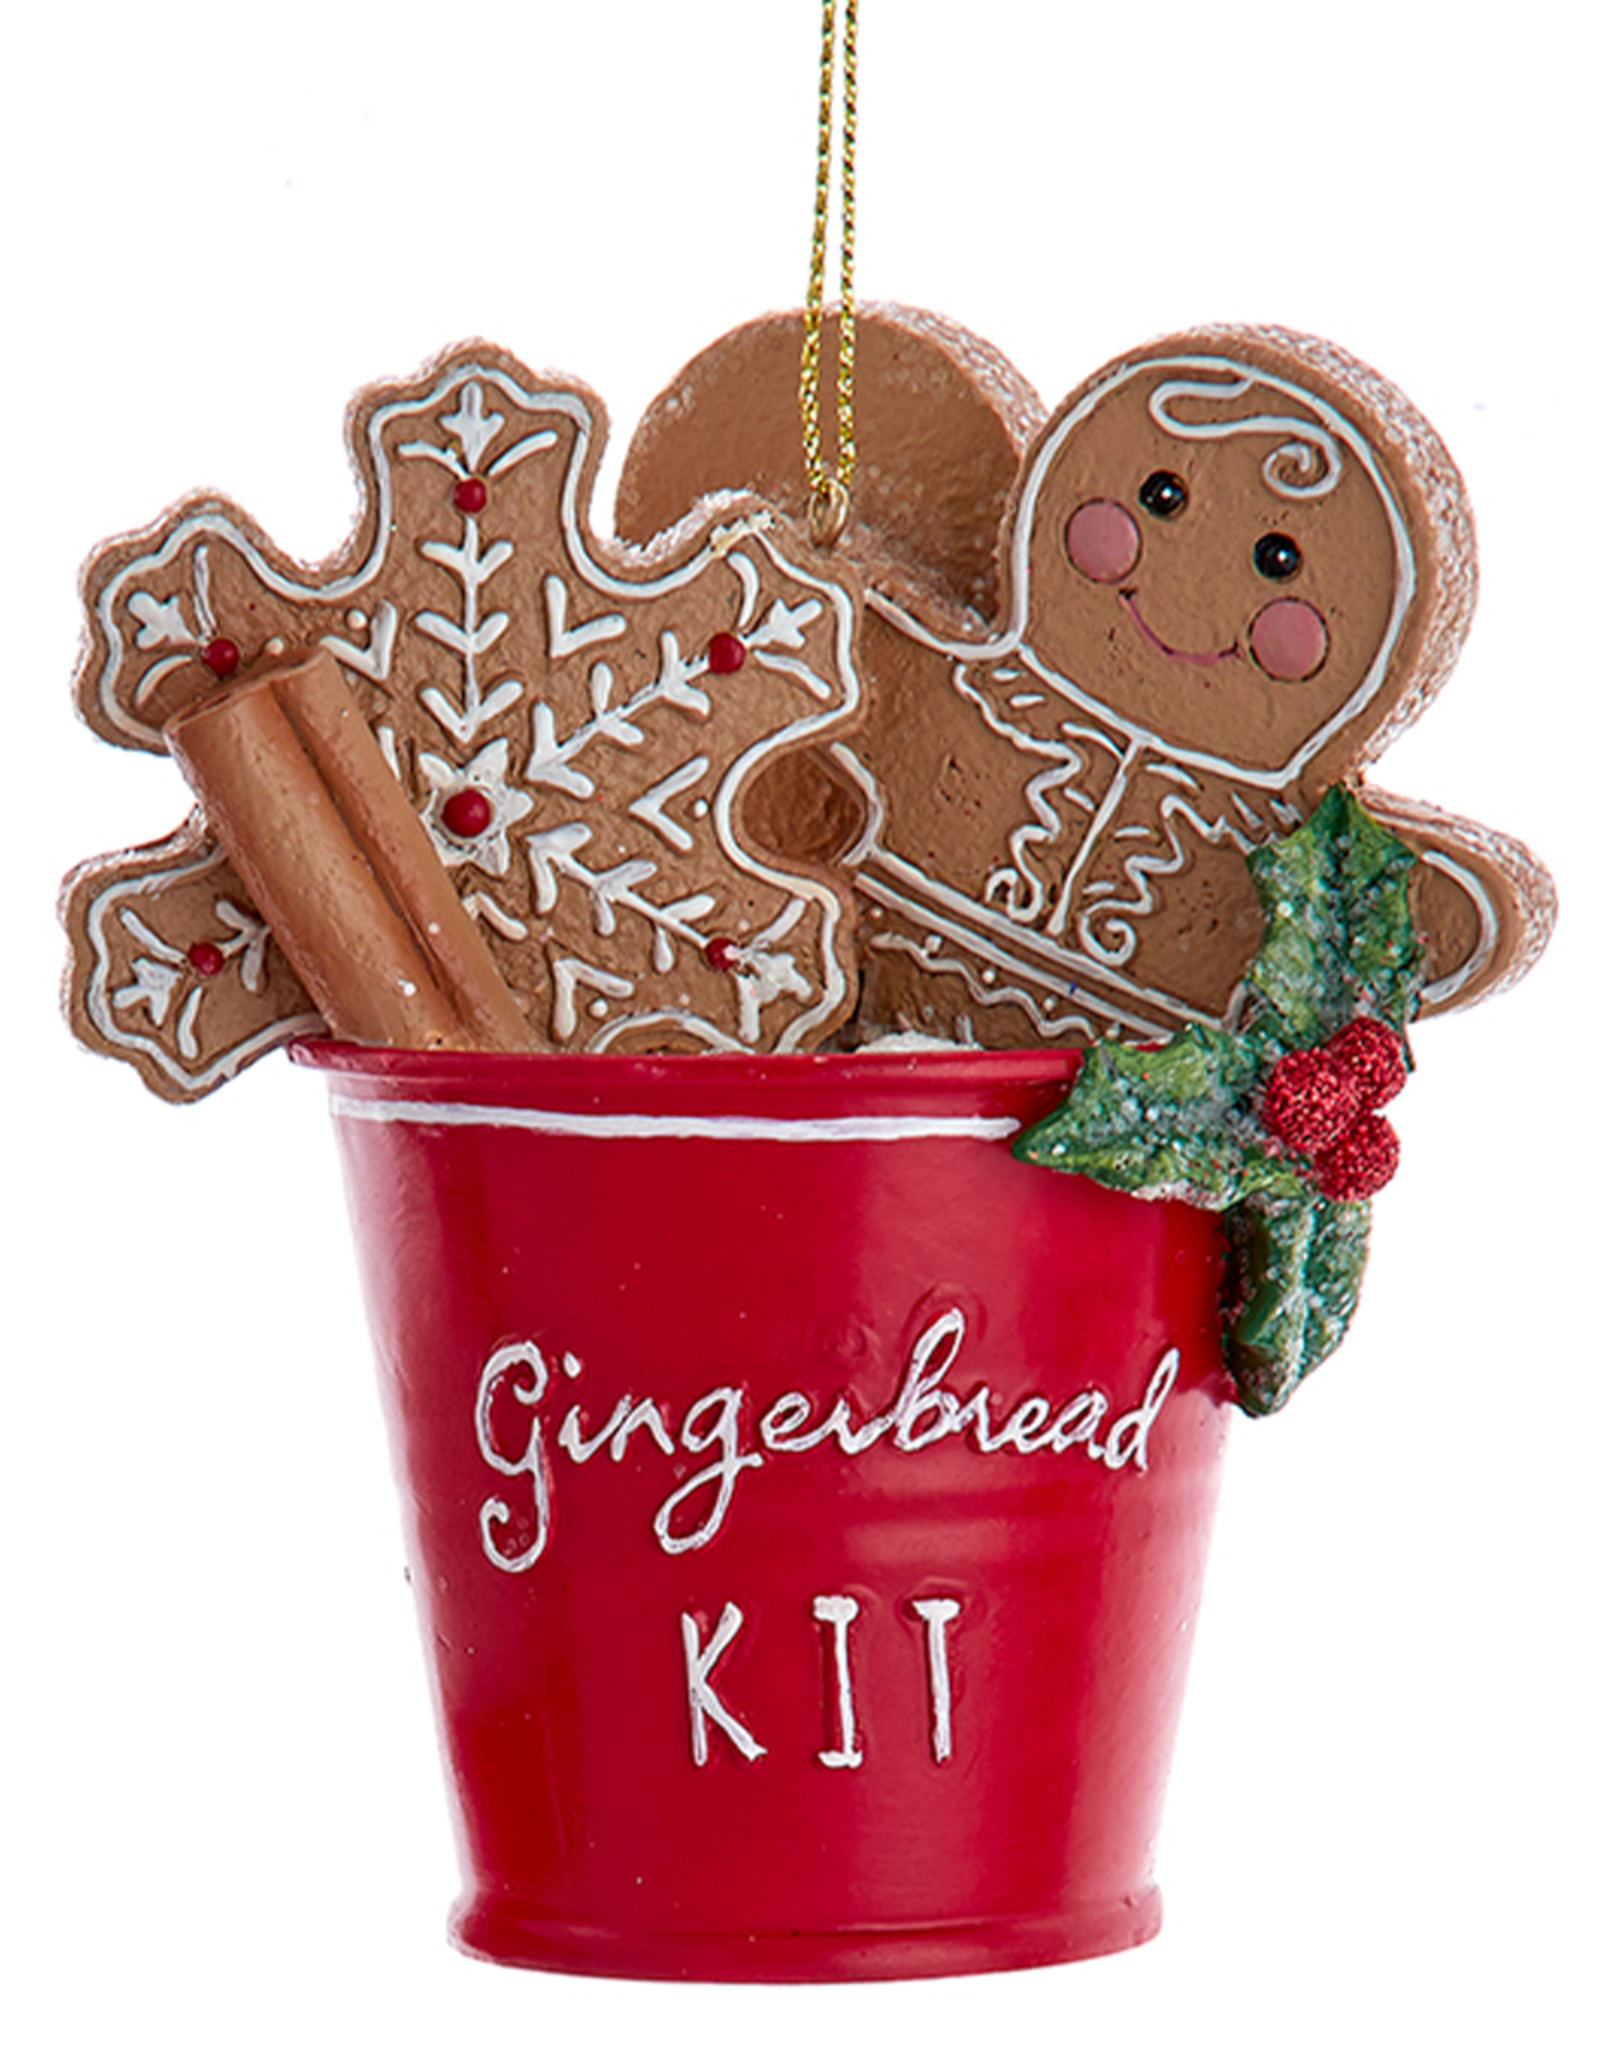 Kurt Adler Gingerbread Man In Pail Ornament w Saying Gingerbread Kit